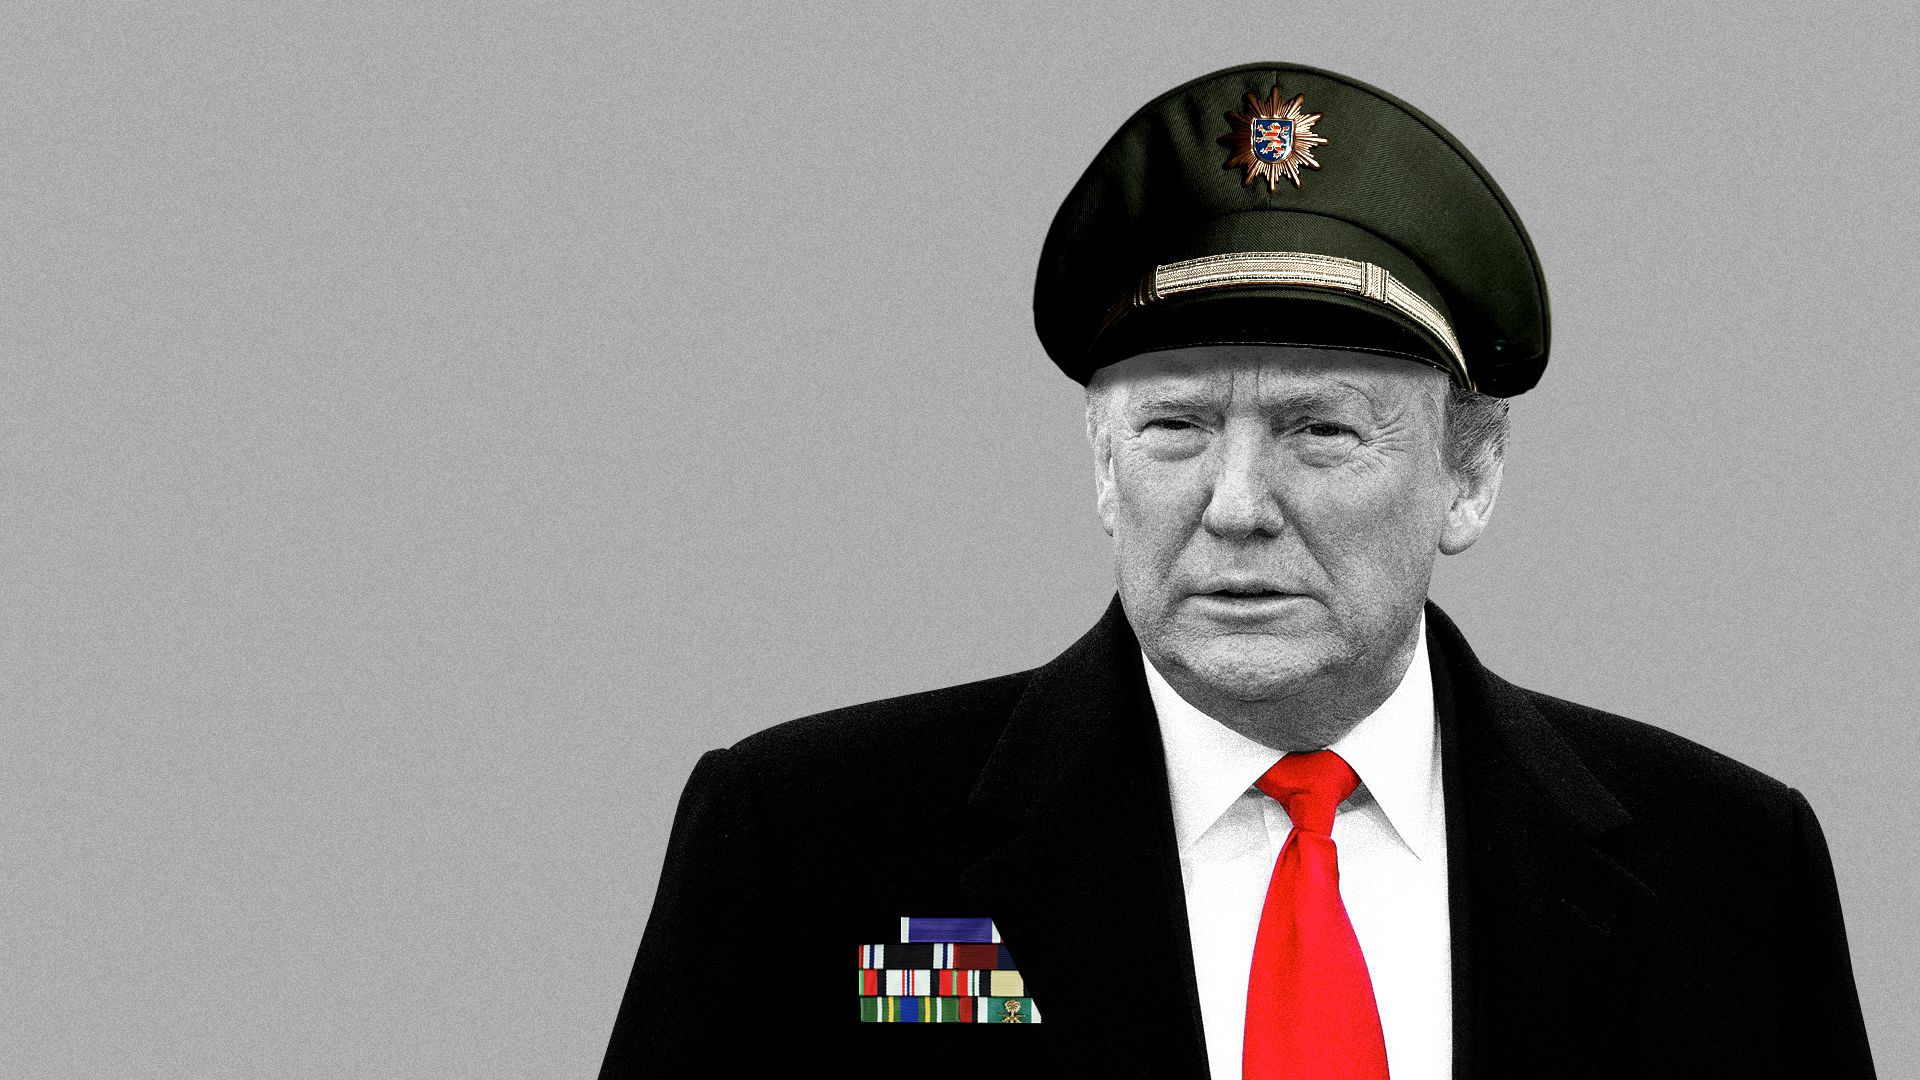 Illustration of President Trump in military garb